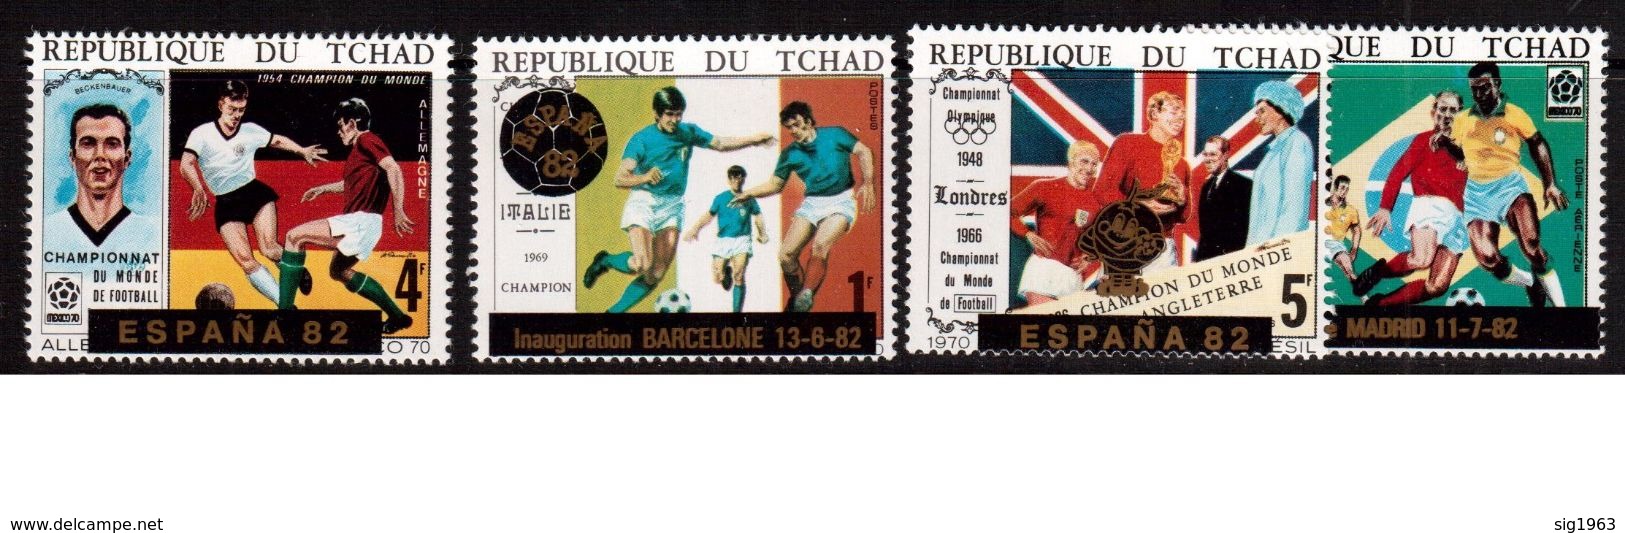 Chad-1982,(Mi.) ,Football, Soccer, Fussball,calcio,MNH - 1982 – Espagne